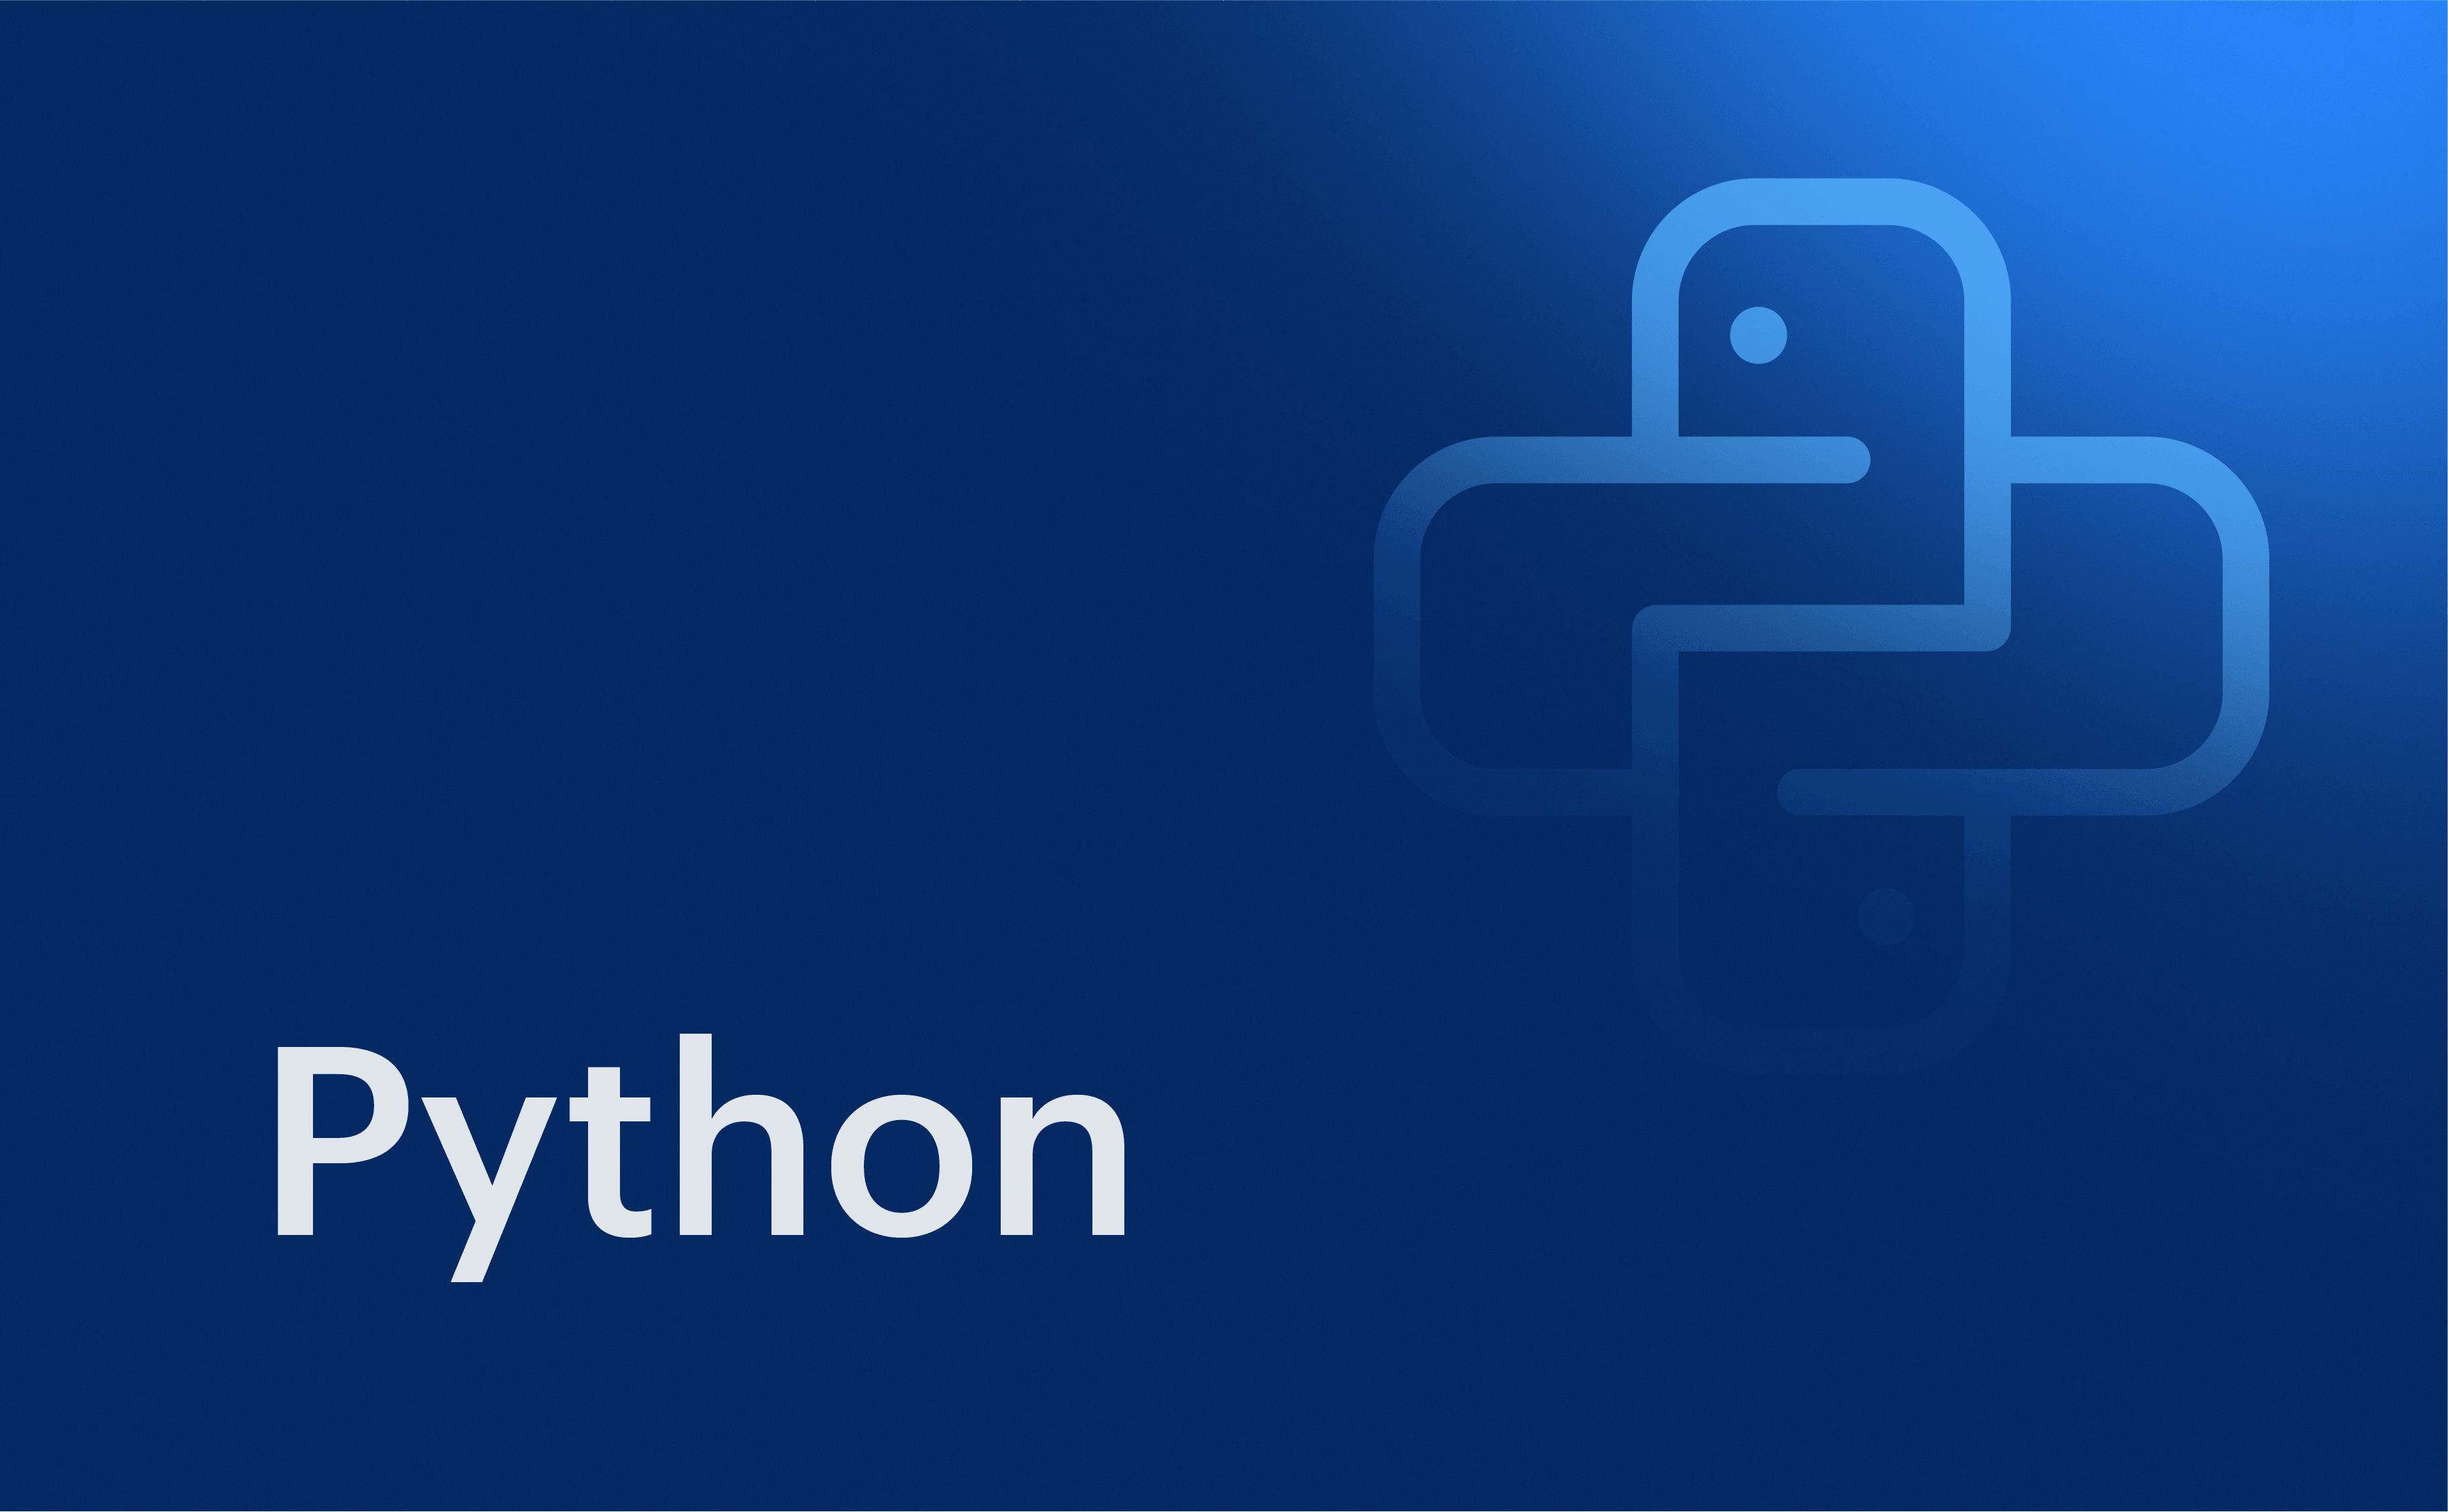 Guide to Python Game Development